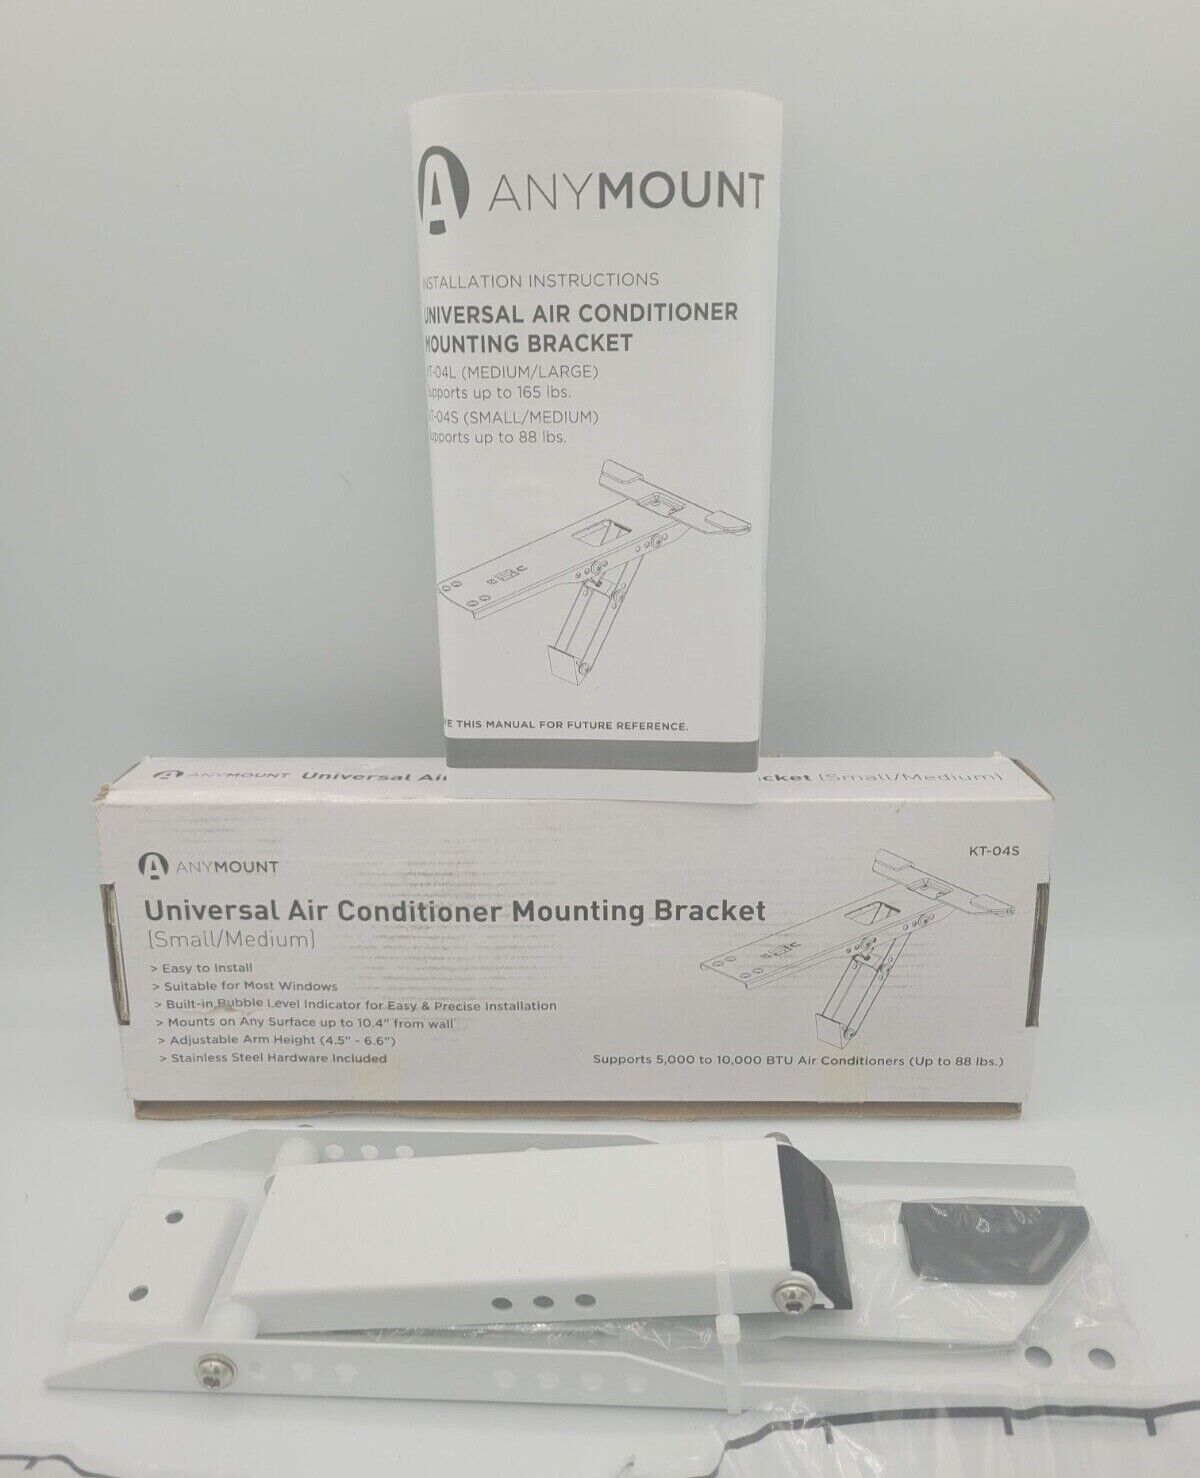 AnyMount Universal Air Conditioning Mounting Bracket - Small/Medium - 88lbs max